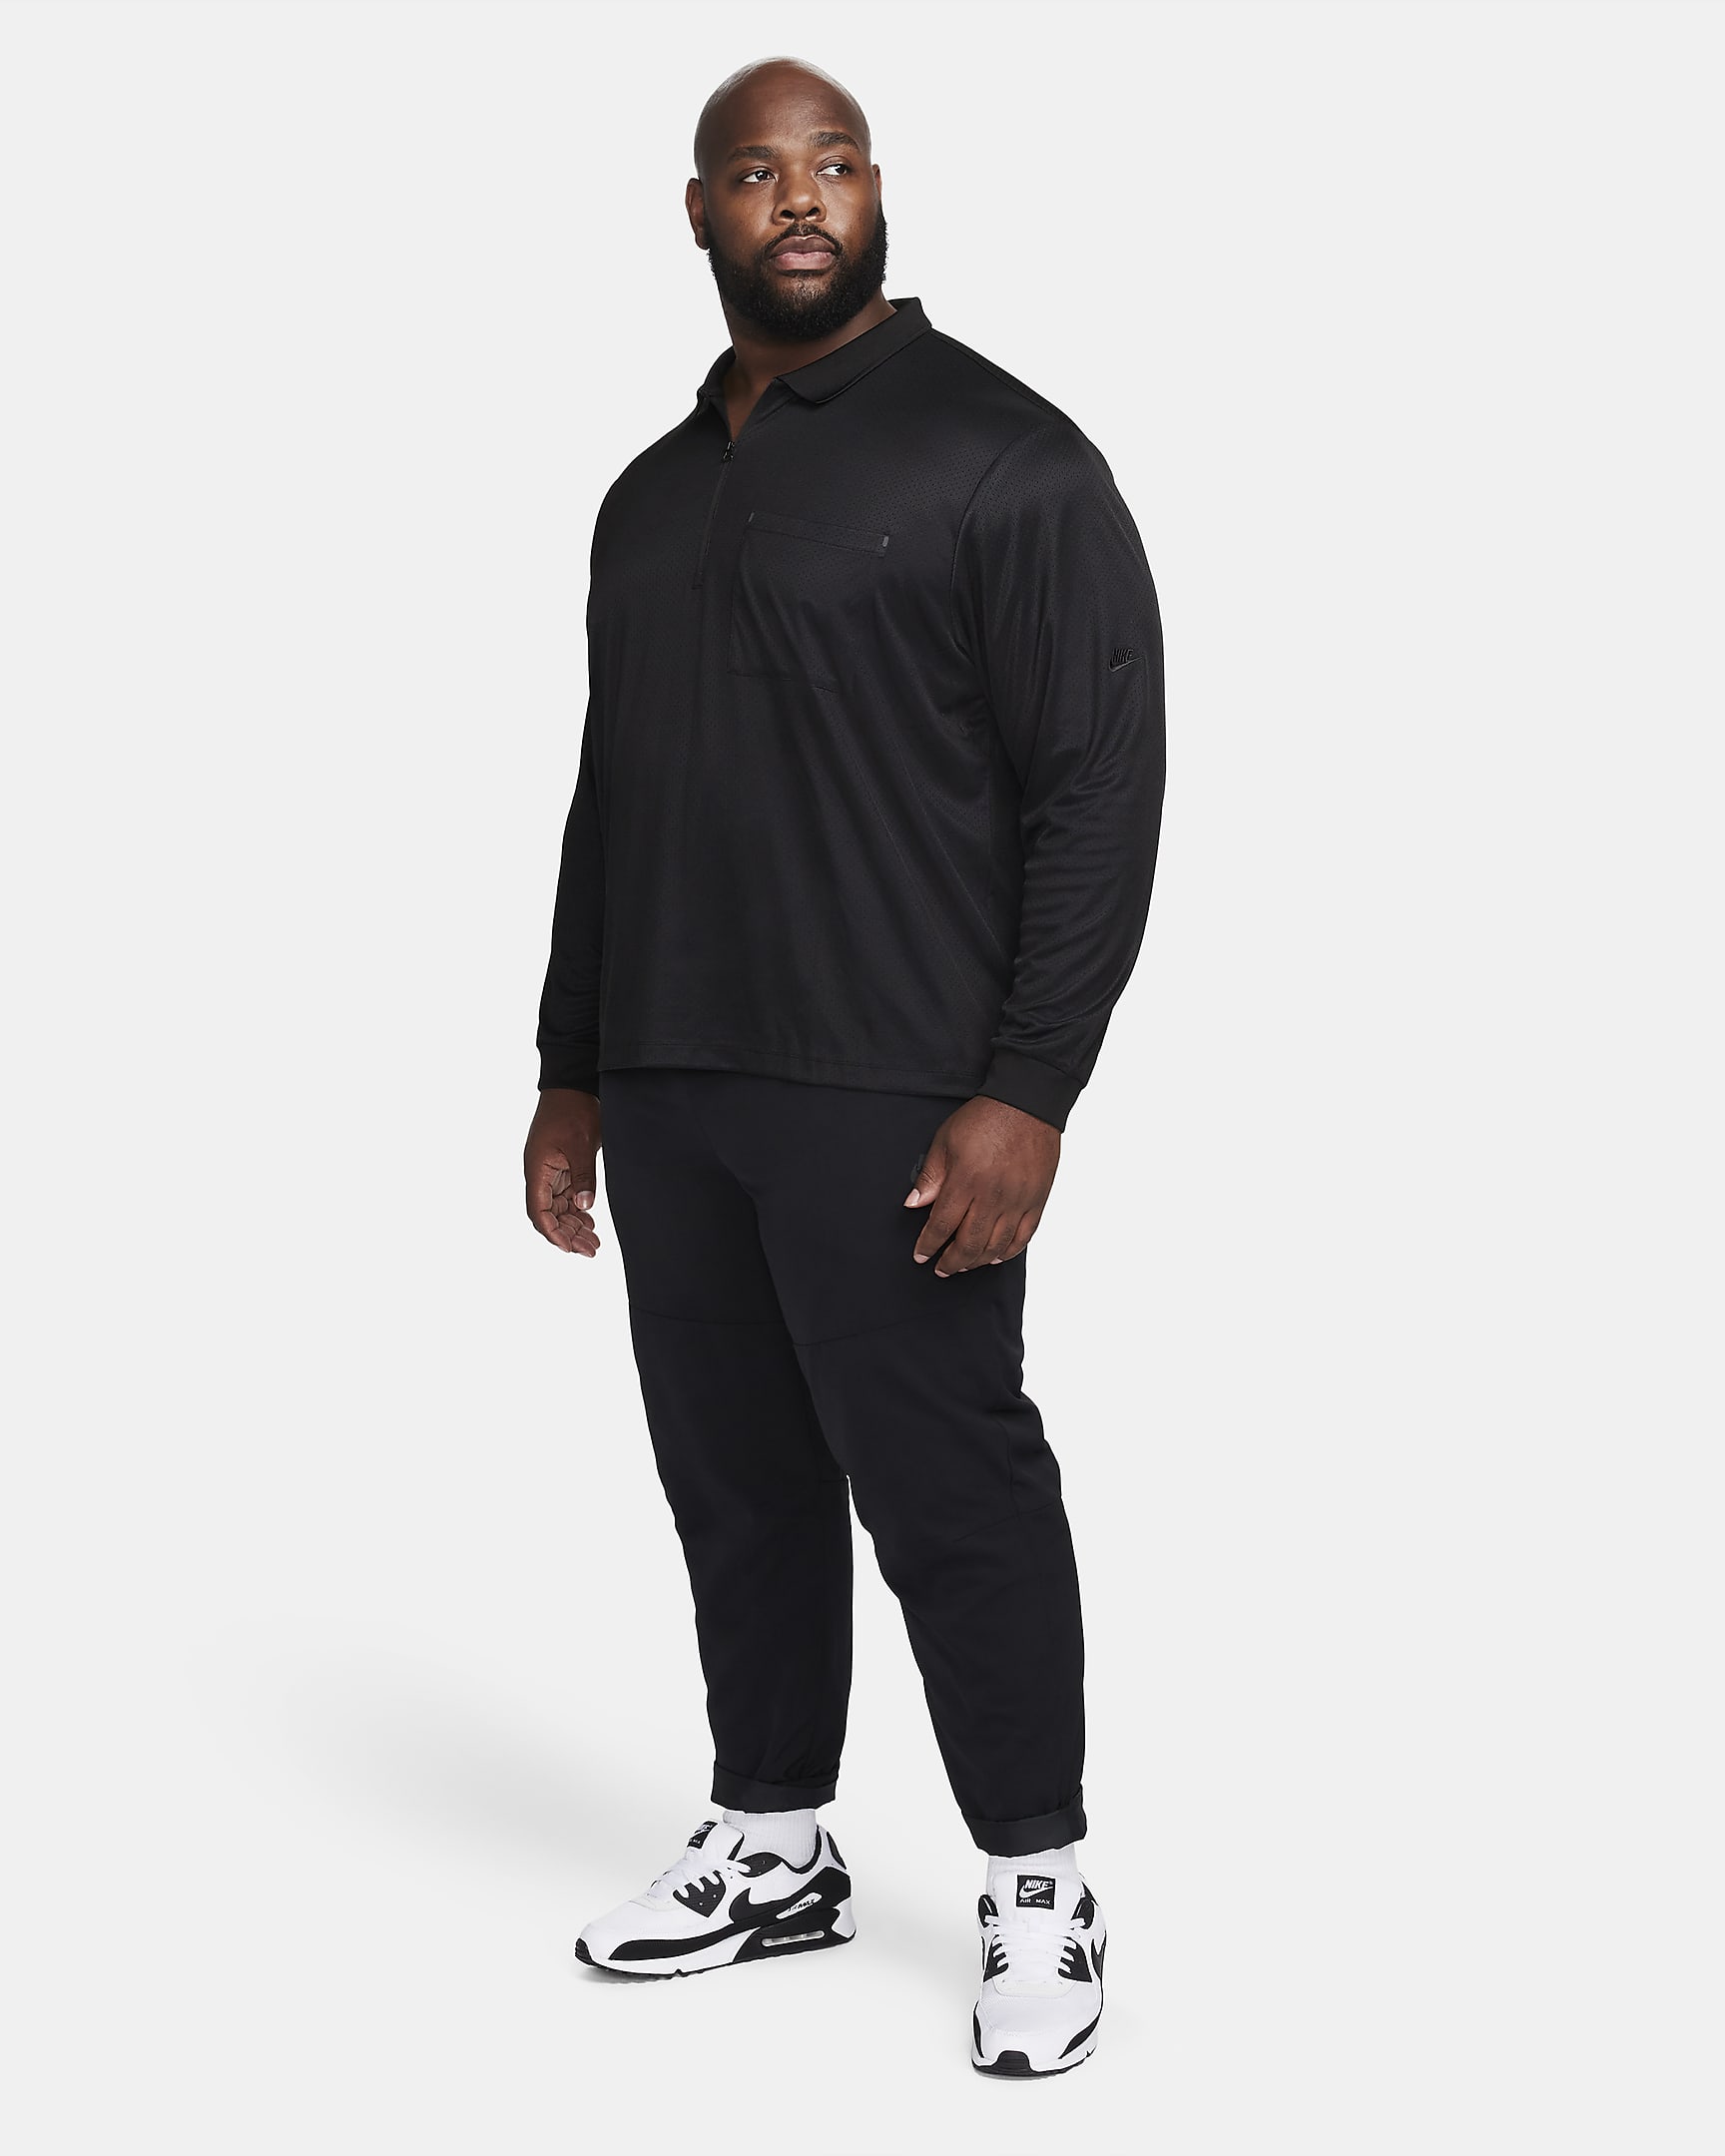 Nike Sportswear Tech Pack Men's Dri-FIT 1/2-Zip Long-Sleeve Top. Nike.com